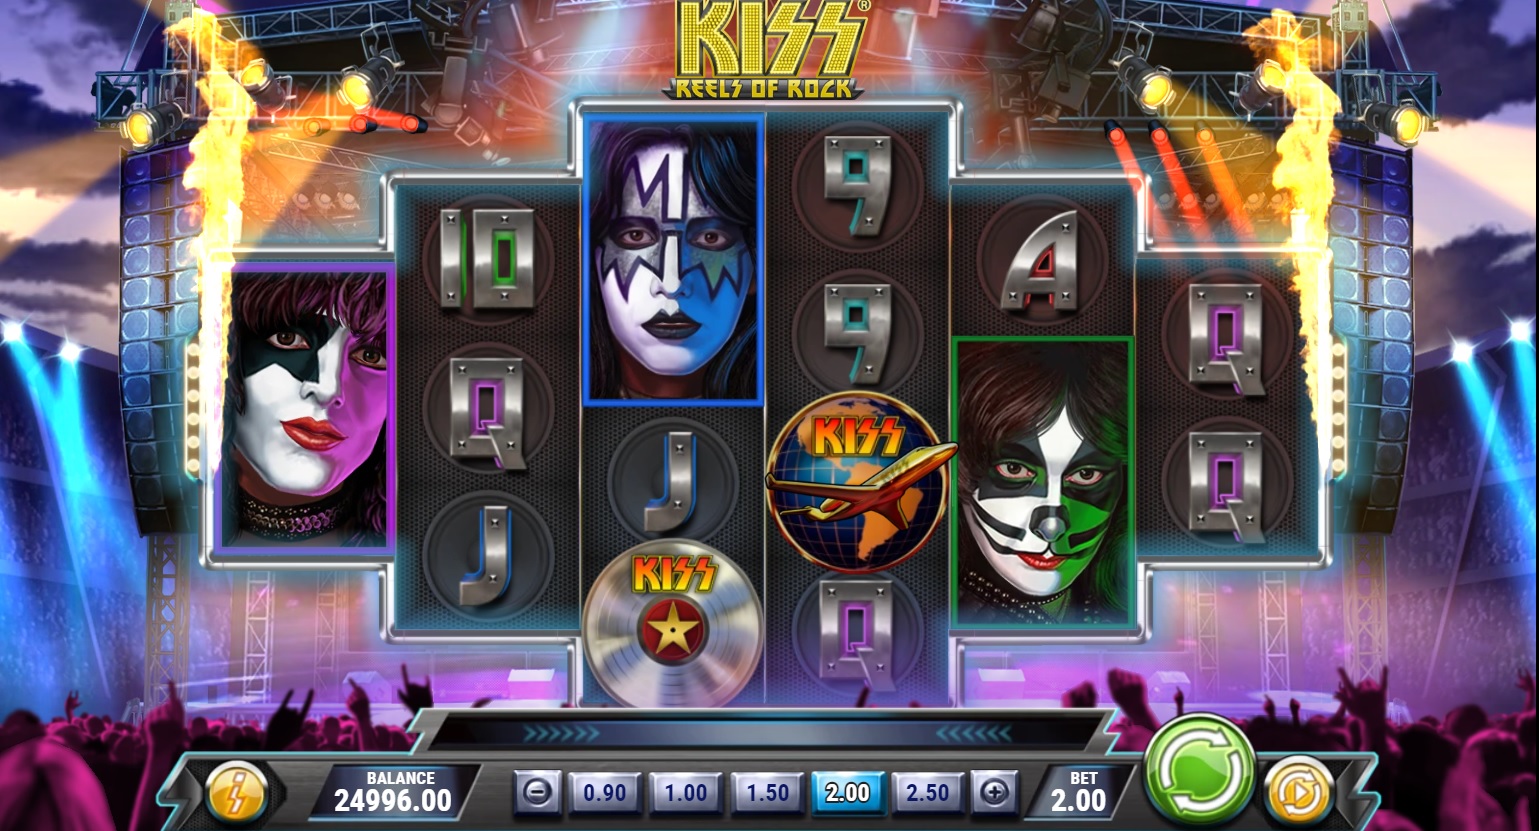 Kiss - Reels of Rock, base slot game